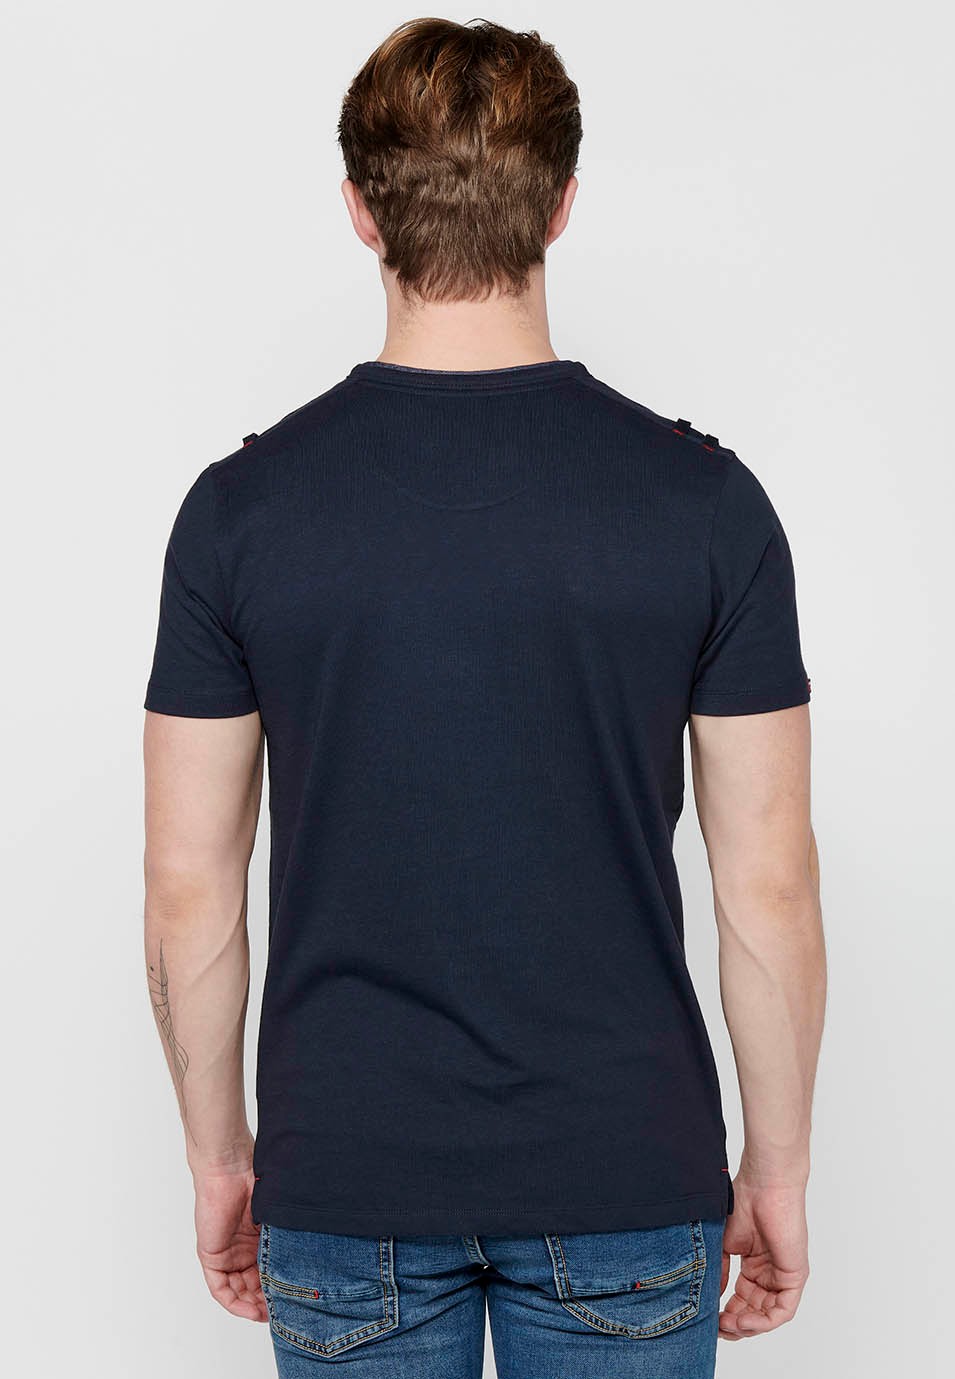 Camiseta de manga corta de Algodón con Cuello redondo con abertura abotonada de Color Navy para Hombre 2